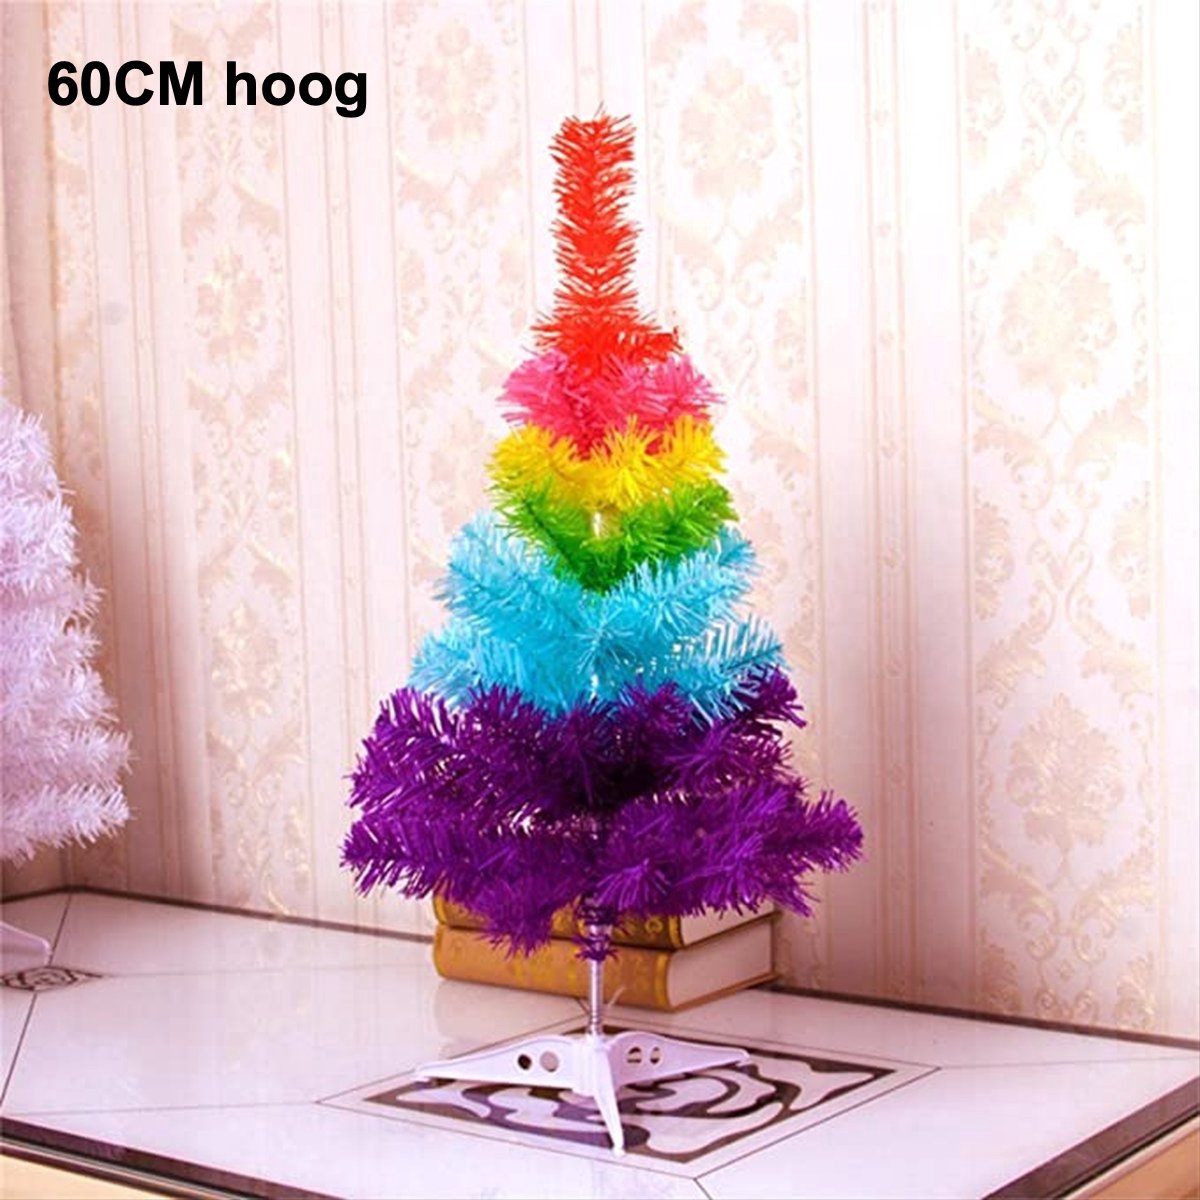 CHPN - Kerstboom - Mini kerstboom - Christmas tree - Rainbow tree - Regenboog kerstboom - Pride - 60CM - Kerstdecoratie - Kerstcadeau - Cadeau - Kerst